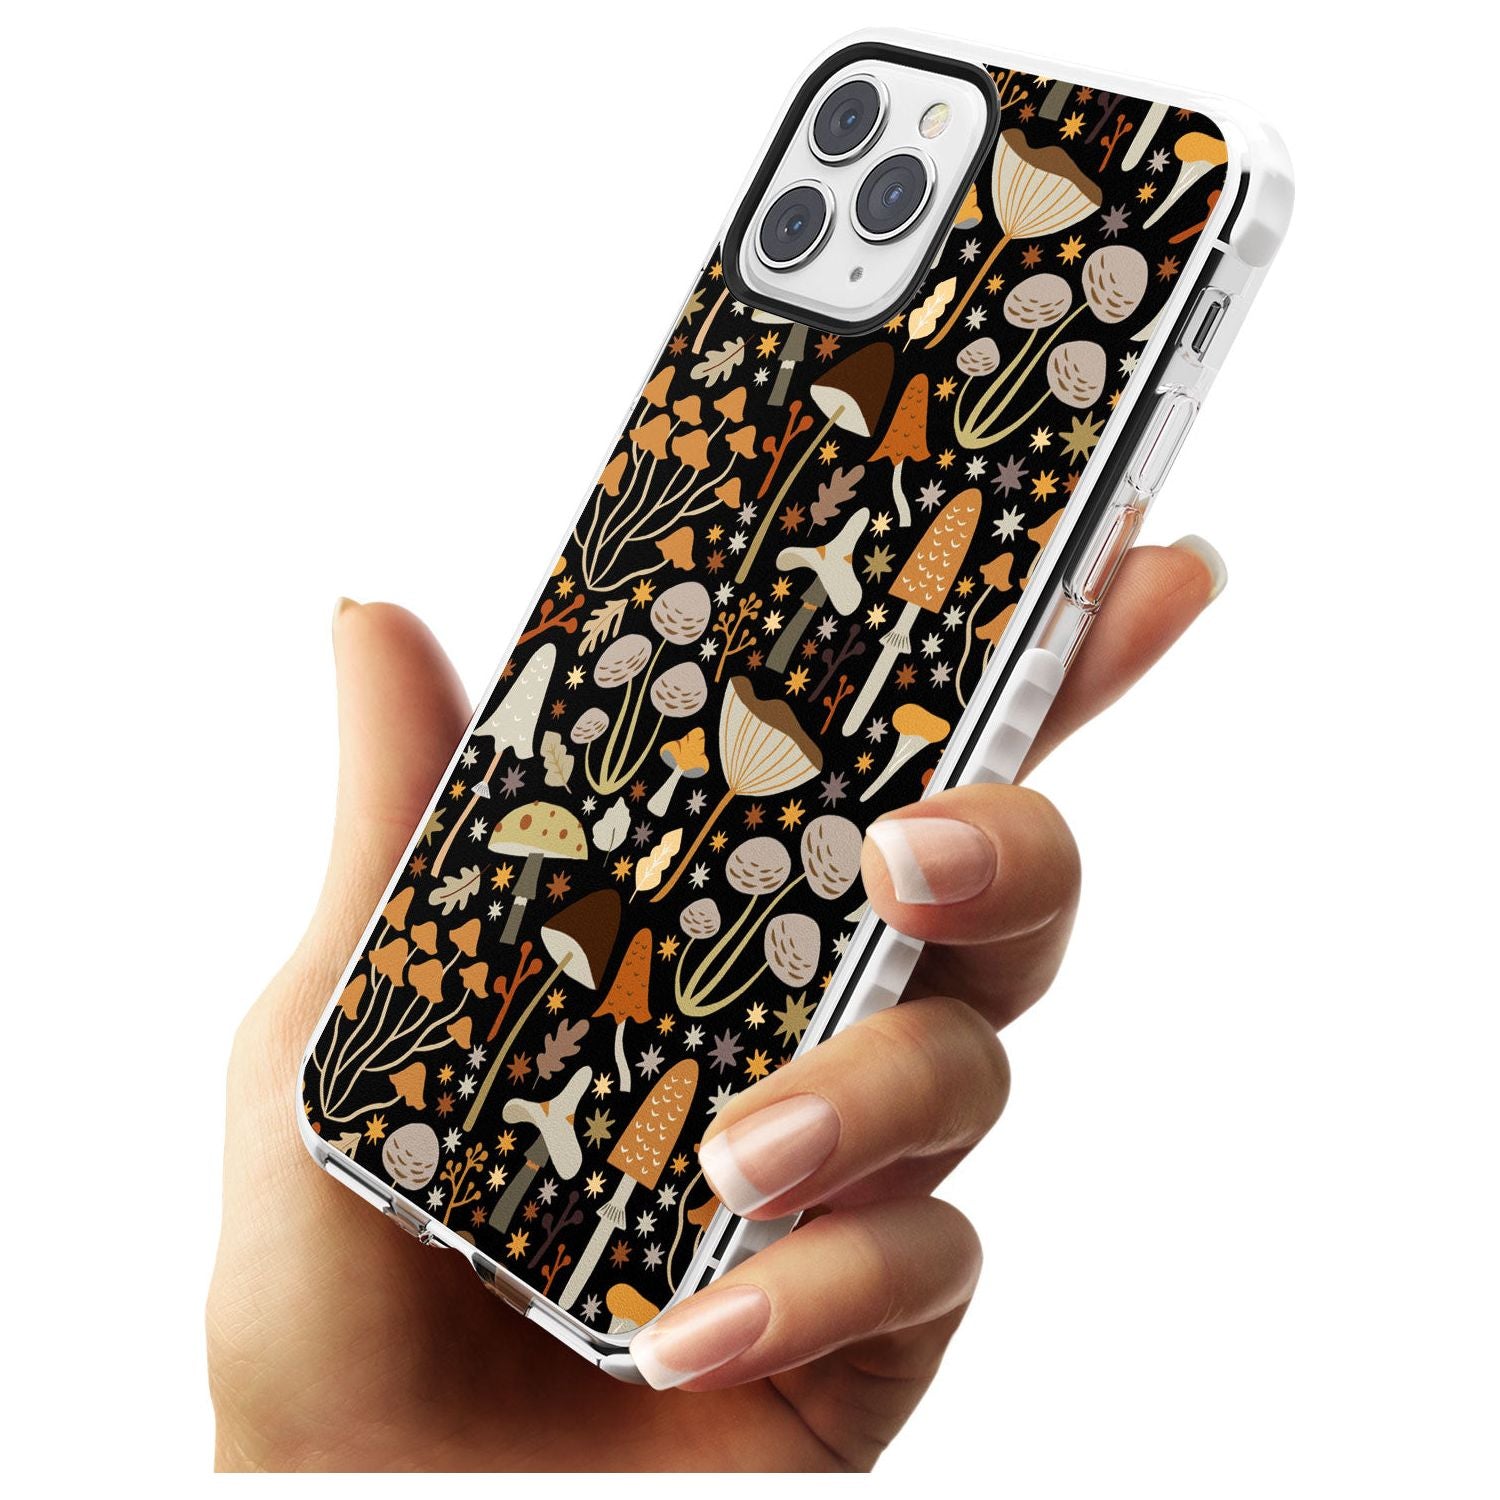 Sentimental Mushrooms Pattern Impact Phone Case for iPhone 11 Pro Max